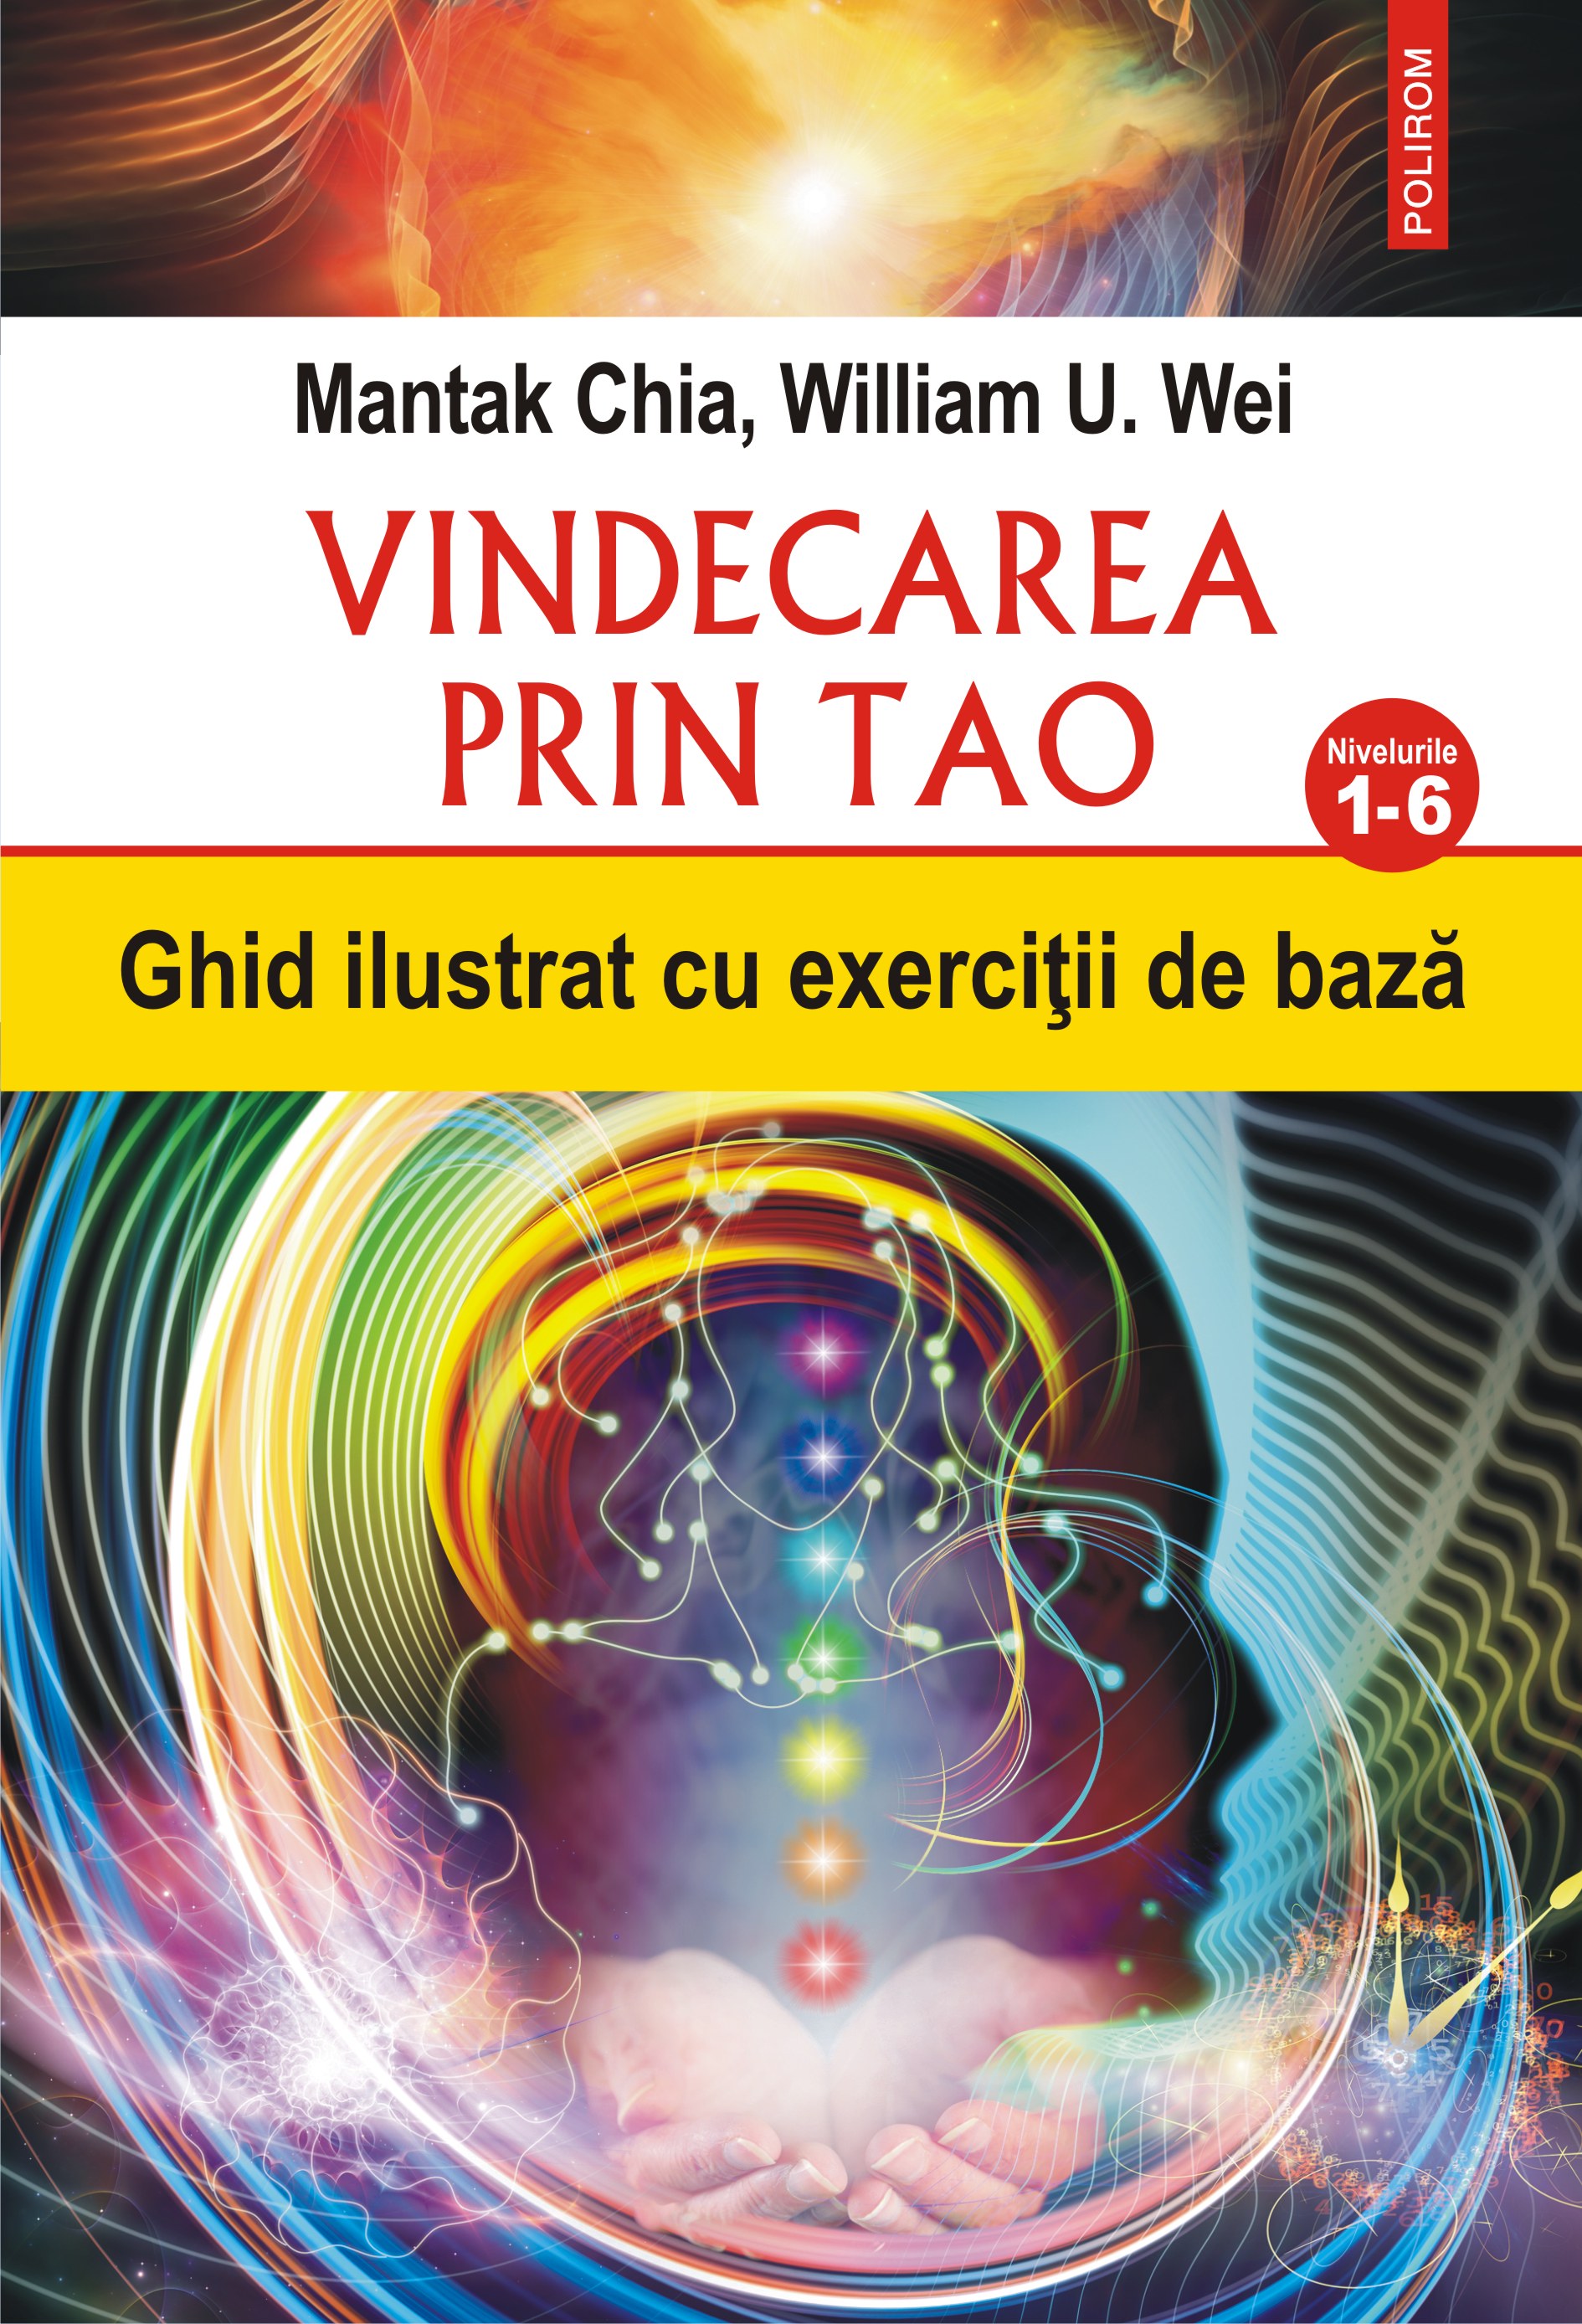 eBook Vindecarea prin Tao ghid ilustrat cu exercitii de baza - Mantak Chia, William U. Wei